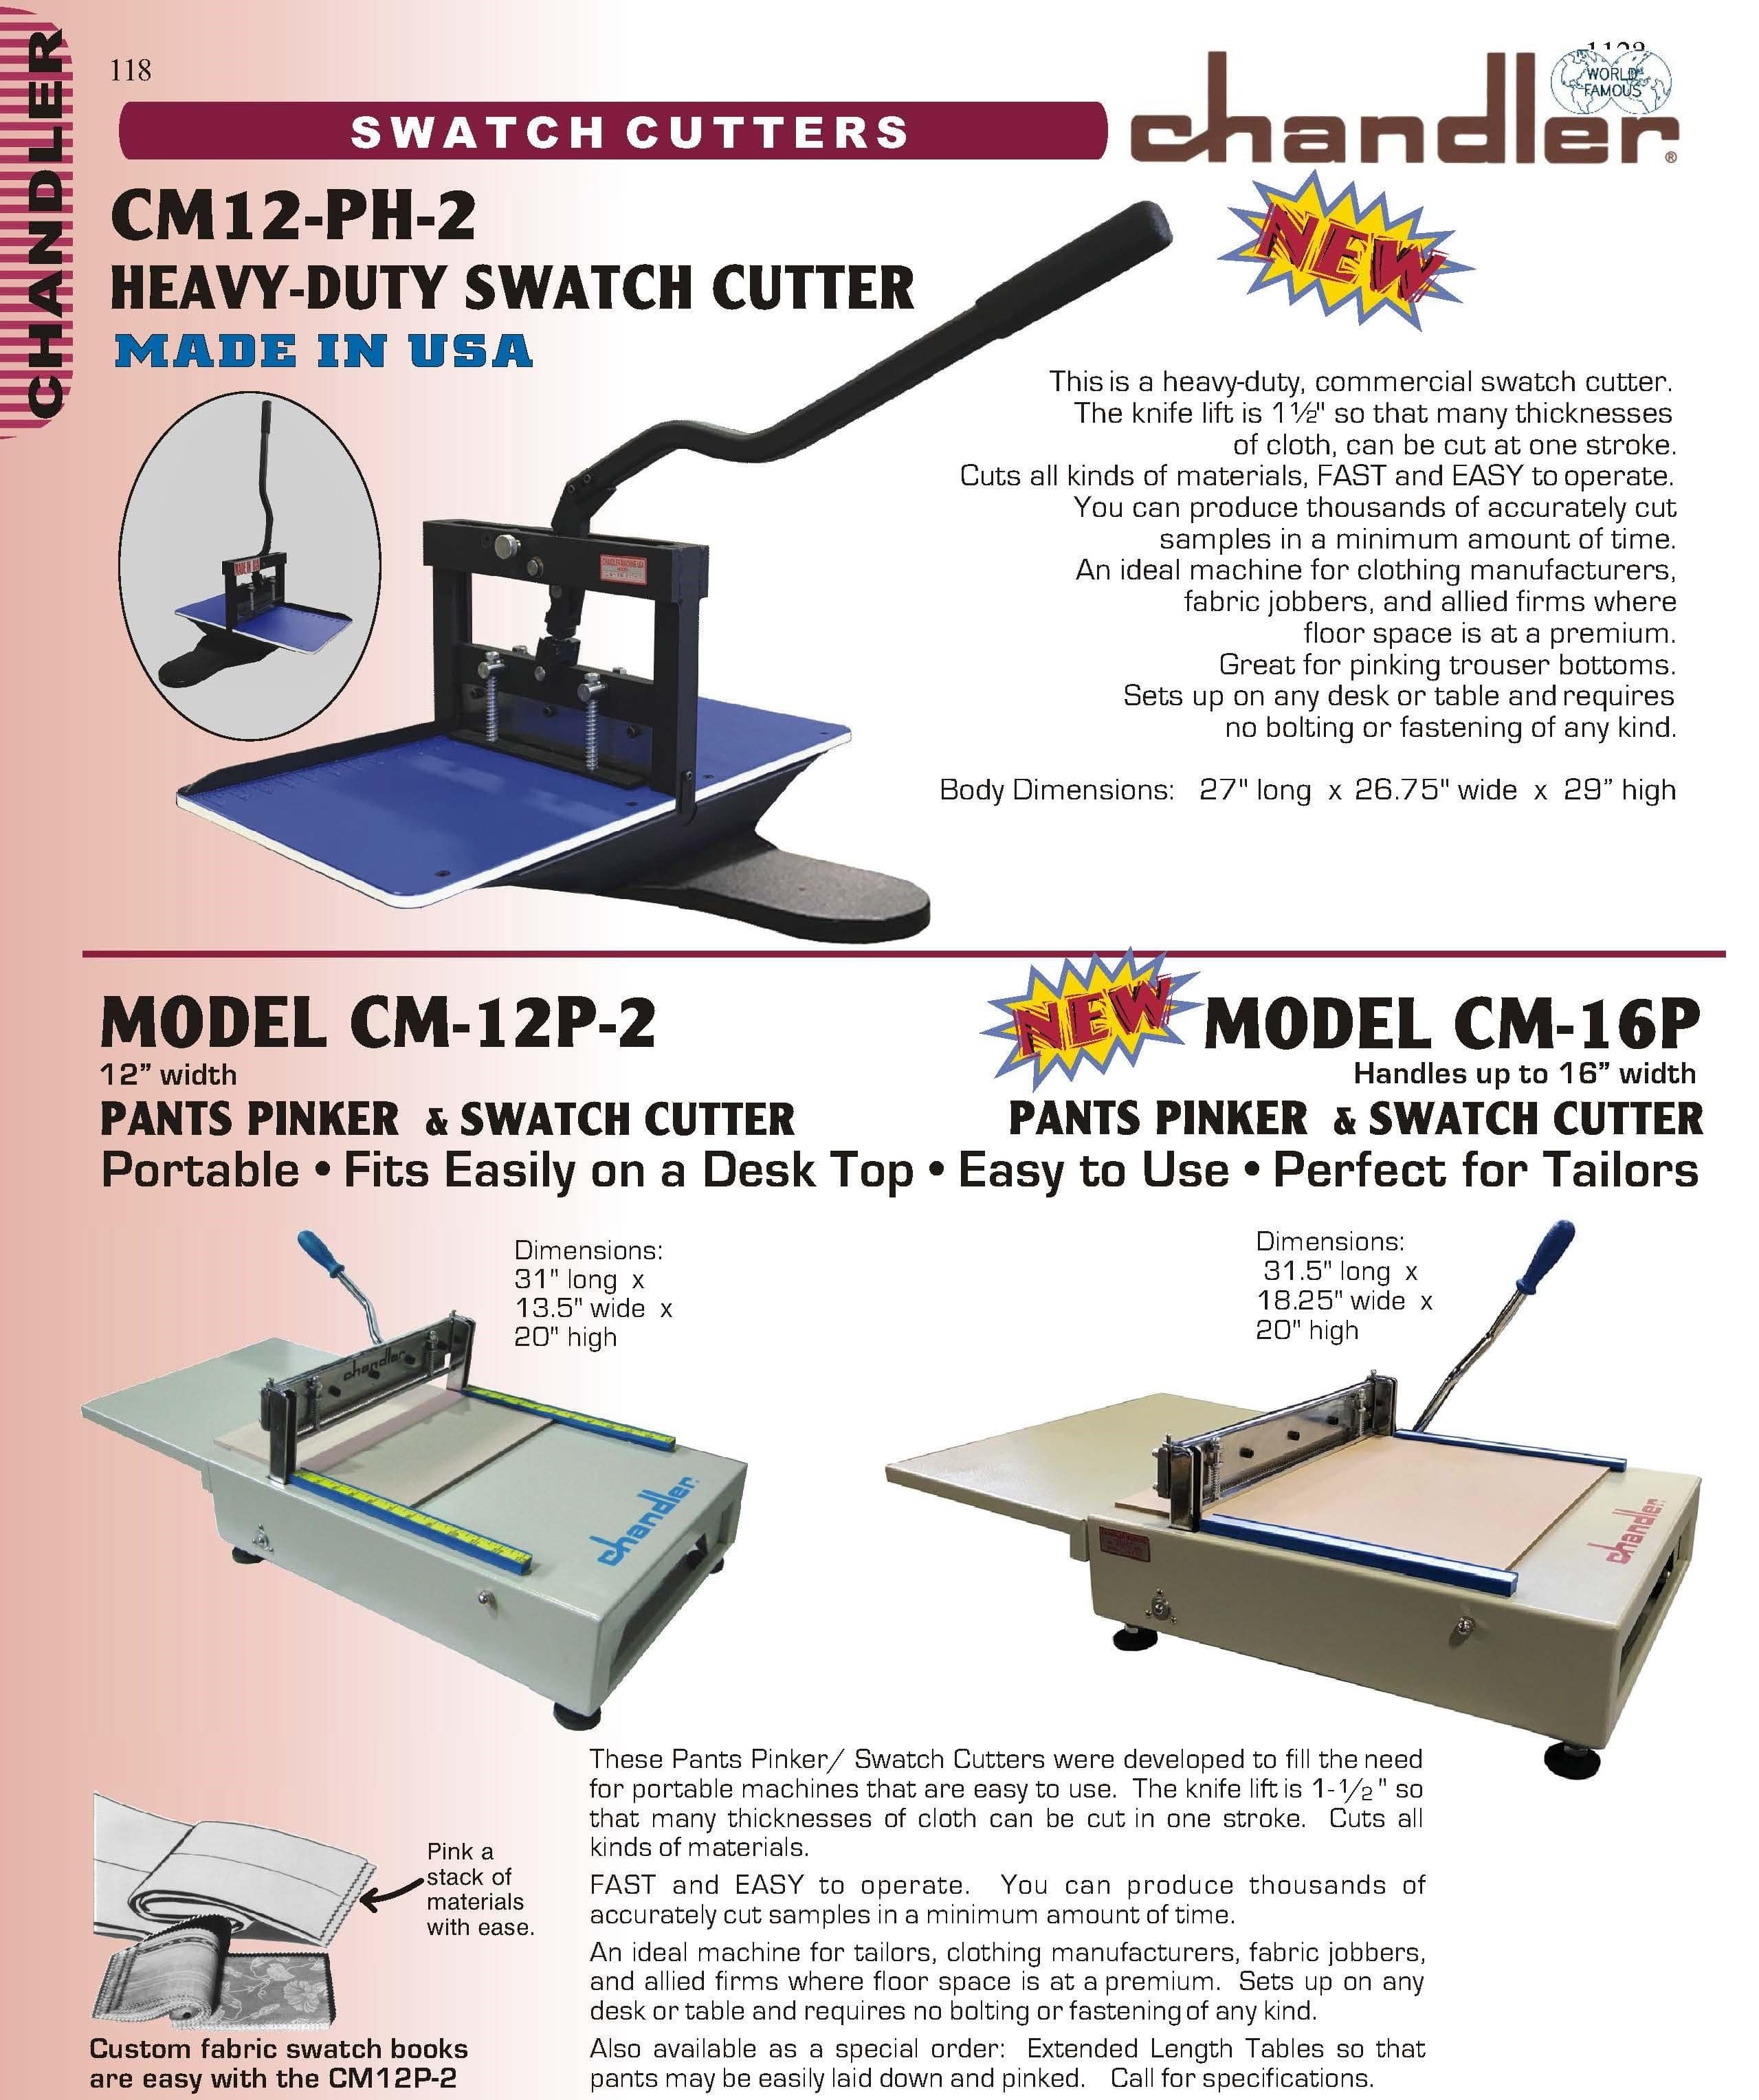 CHANDLER SWATCH CUTTERS CM12-PH-2, CM-12P-2, CM-16P
PANTS PINKER & SWATCH CUTTER